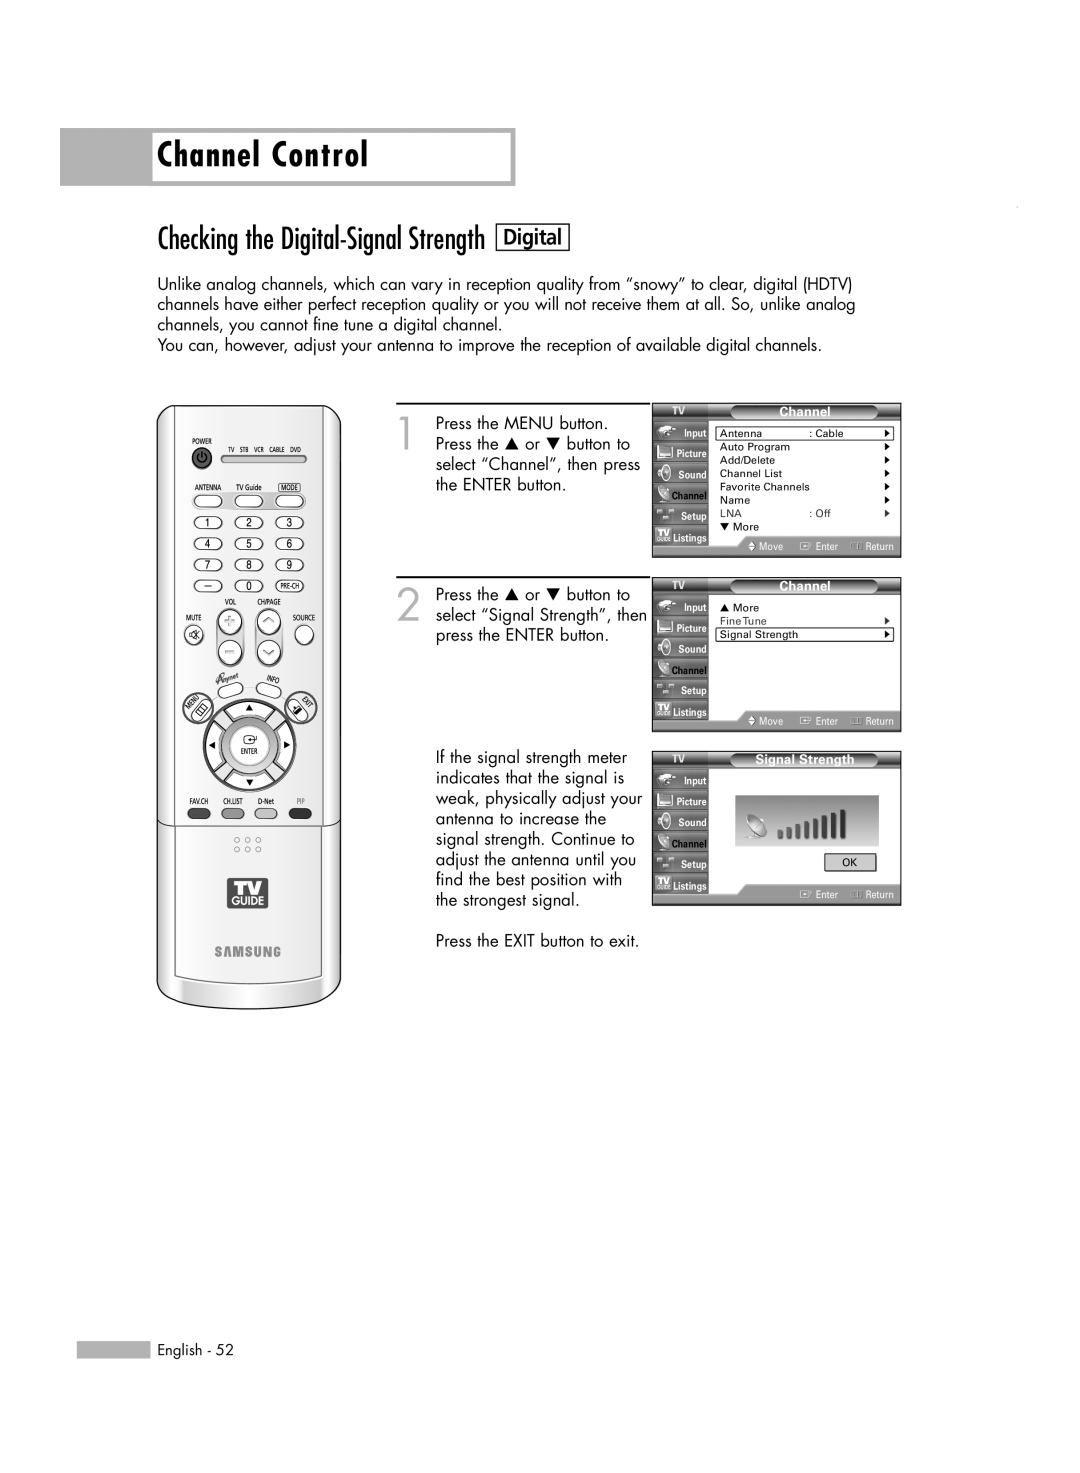 Samsung HL-R5688W manual Checking the Digital-Signal Strength, Channel Control 